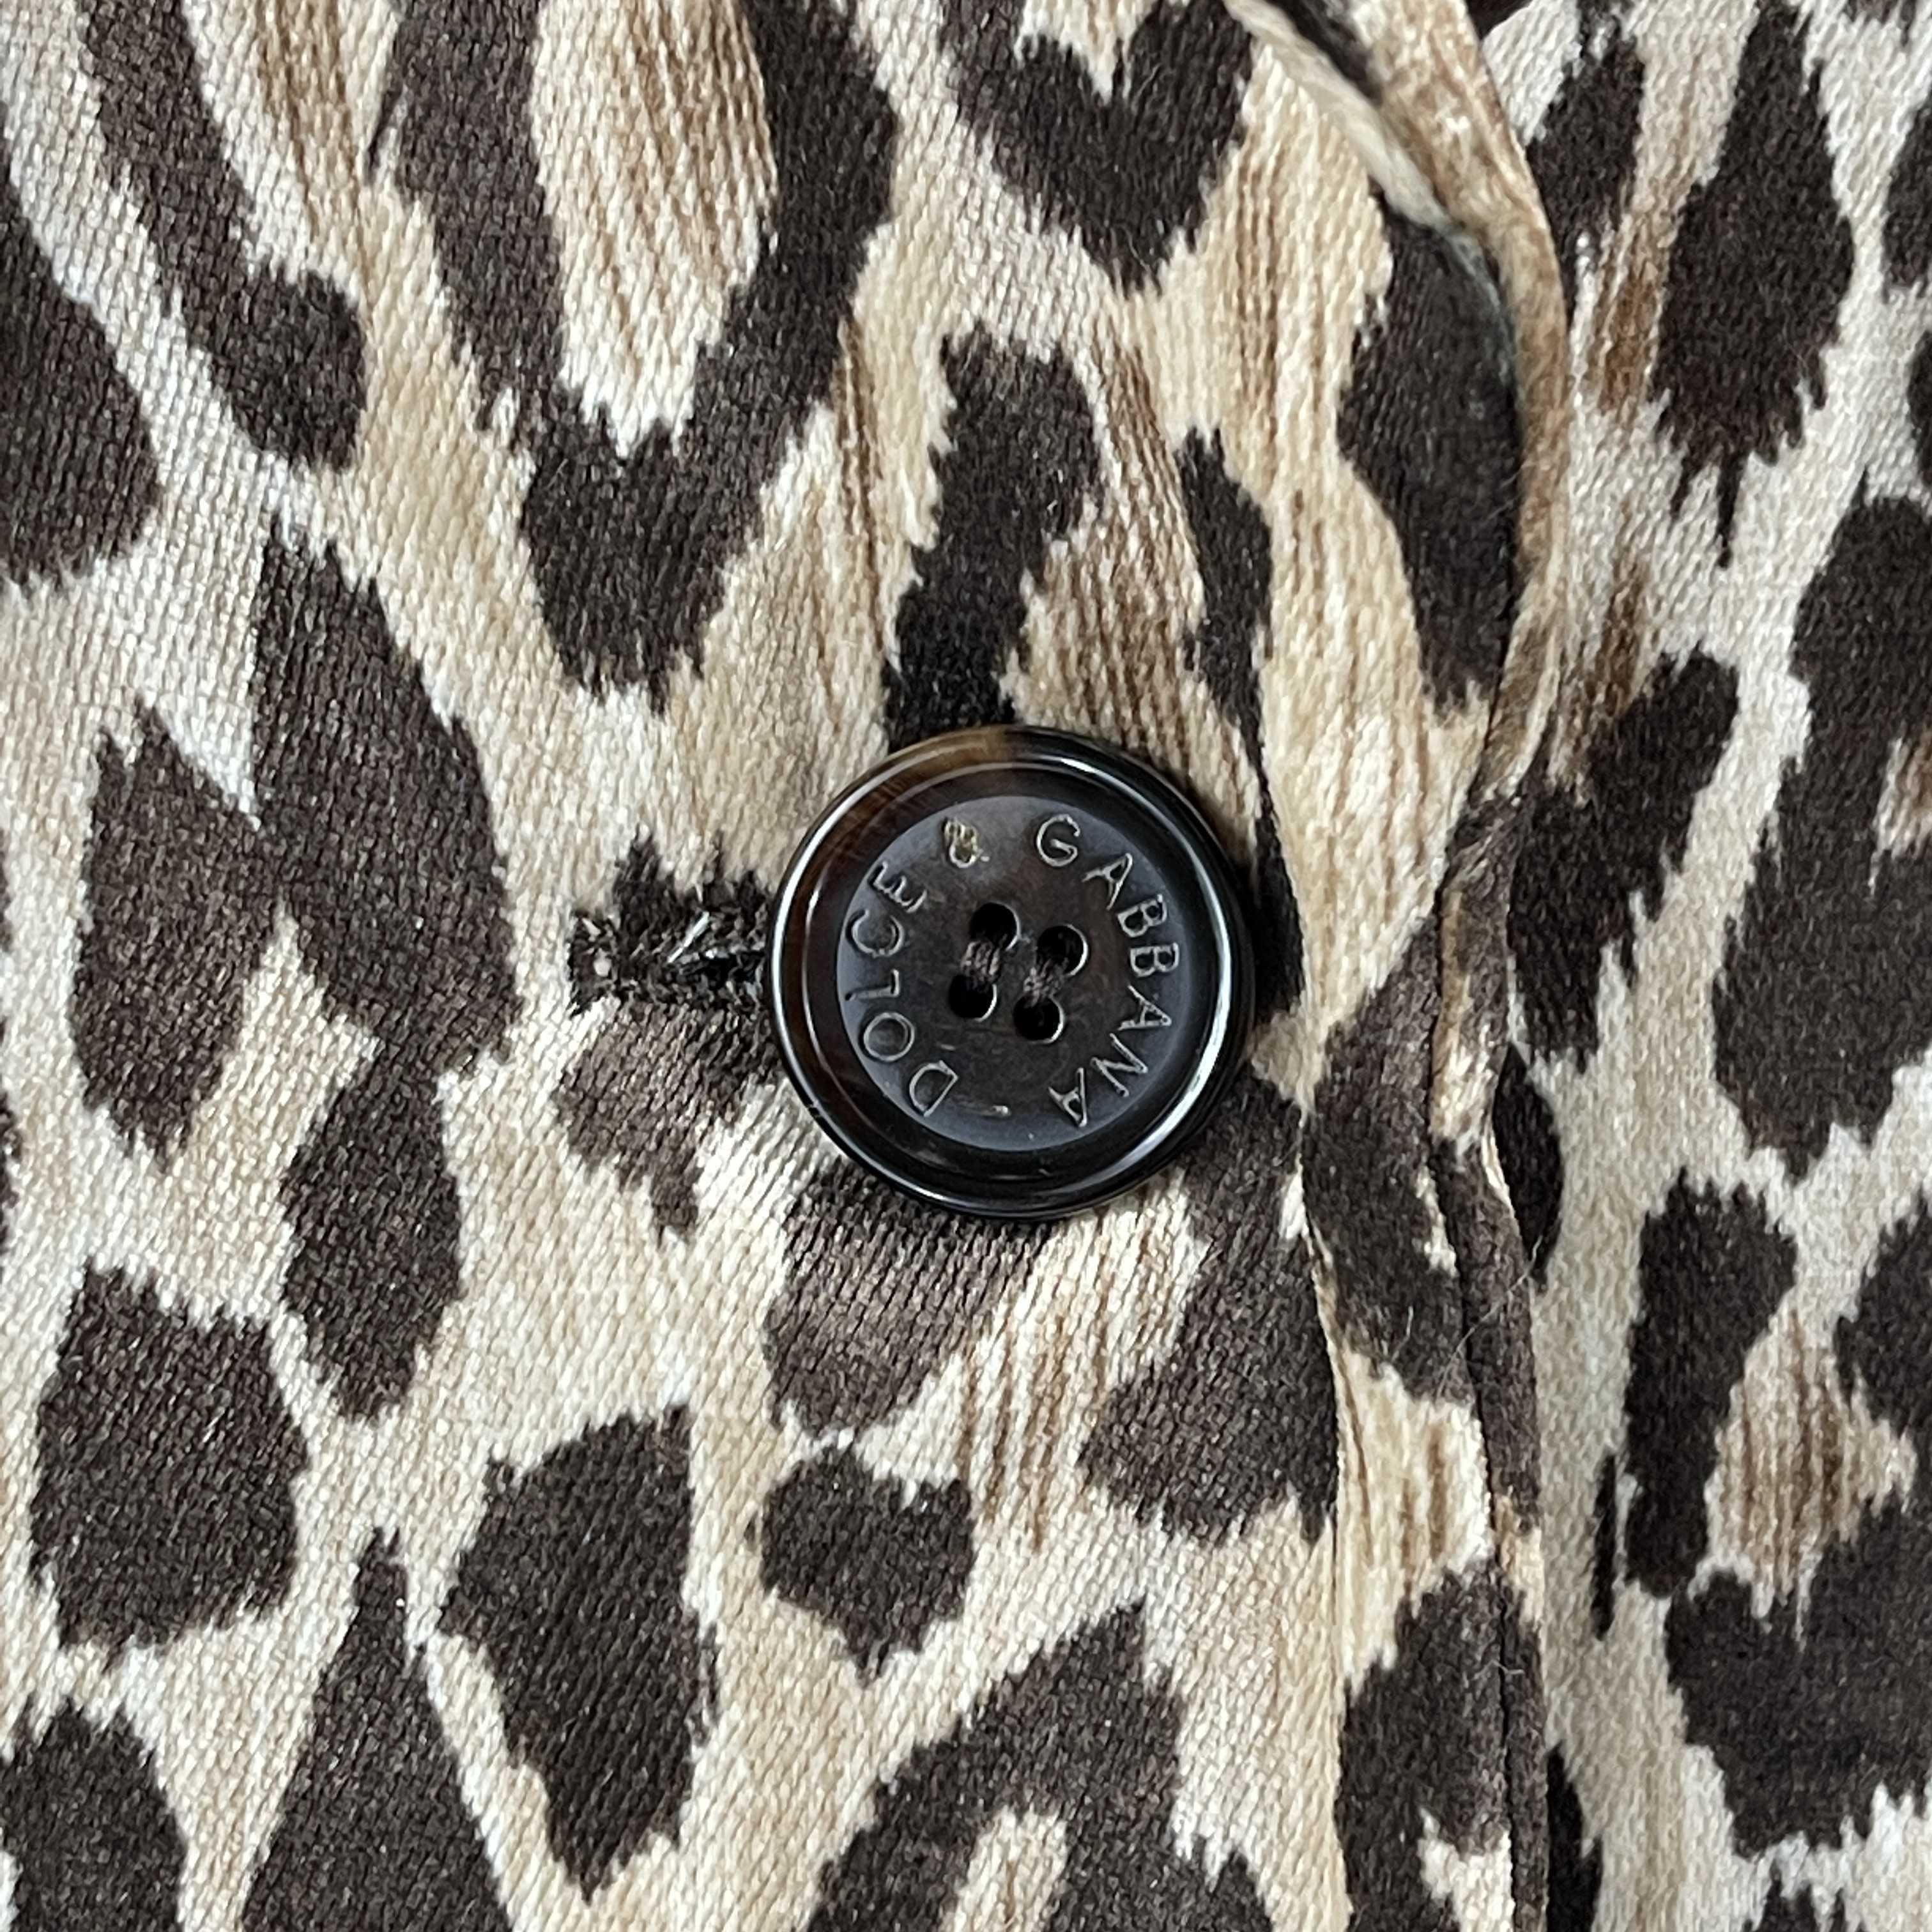 leopard print trench coat